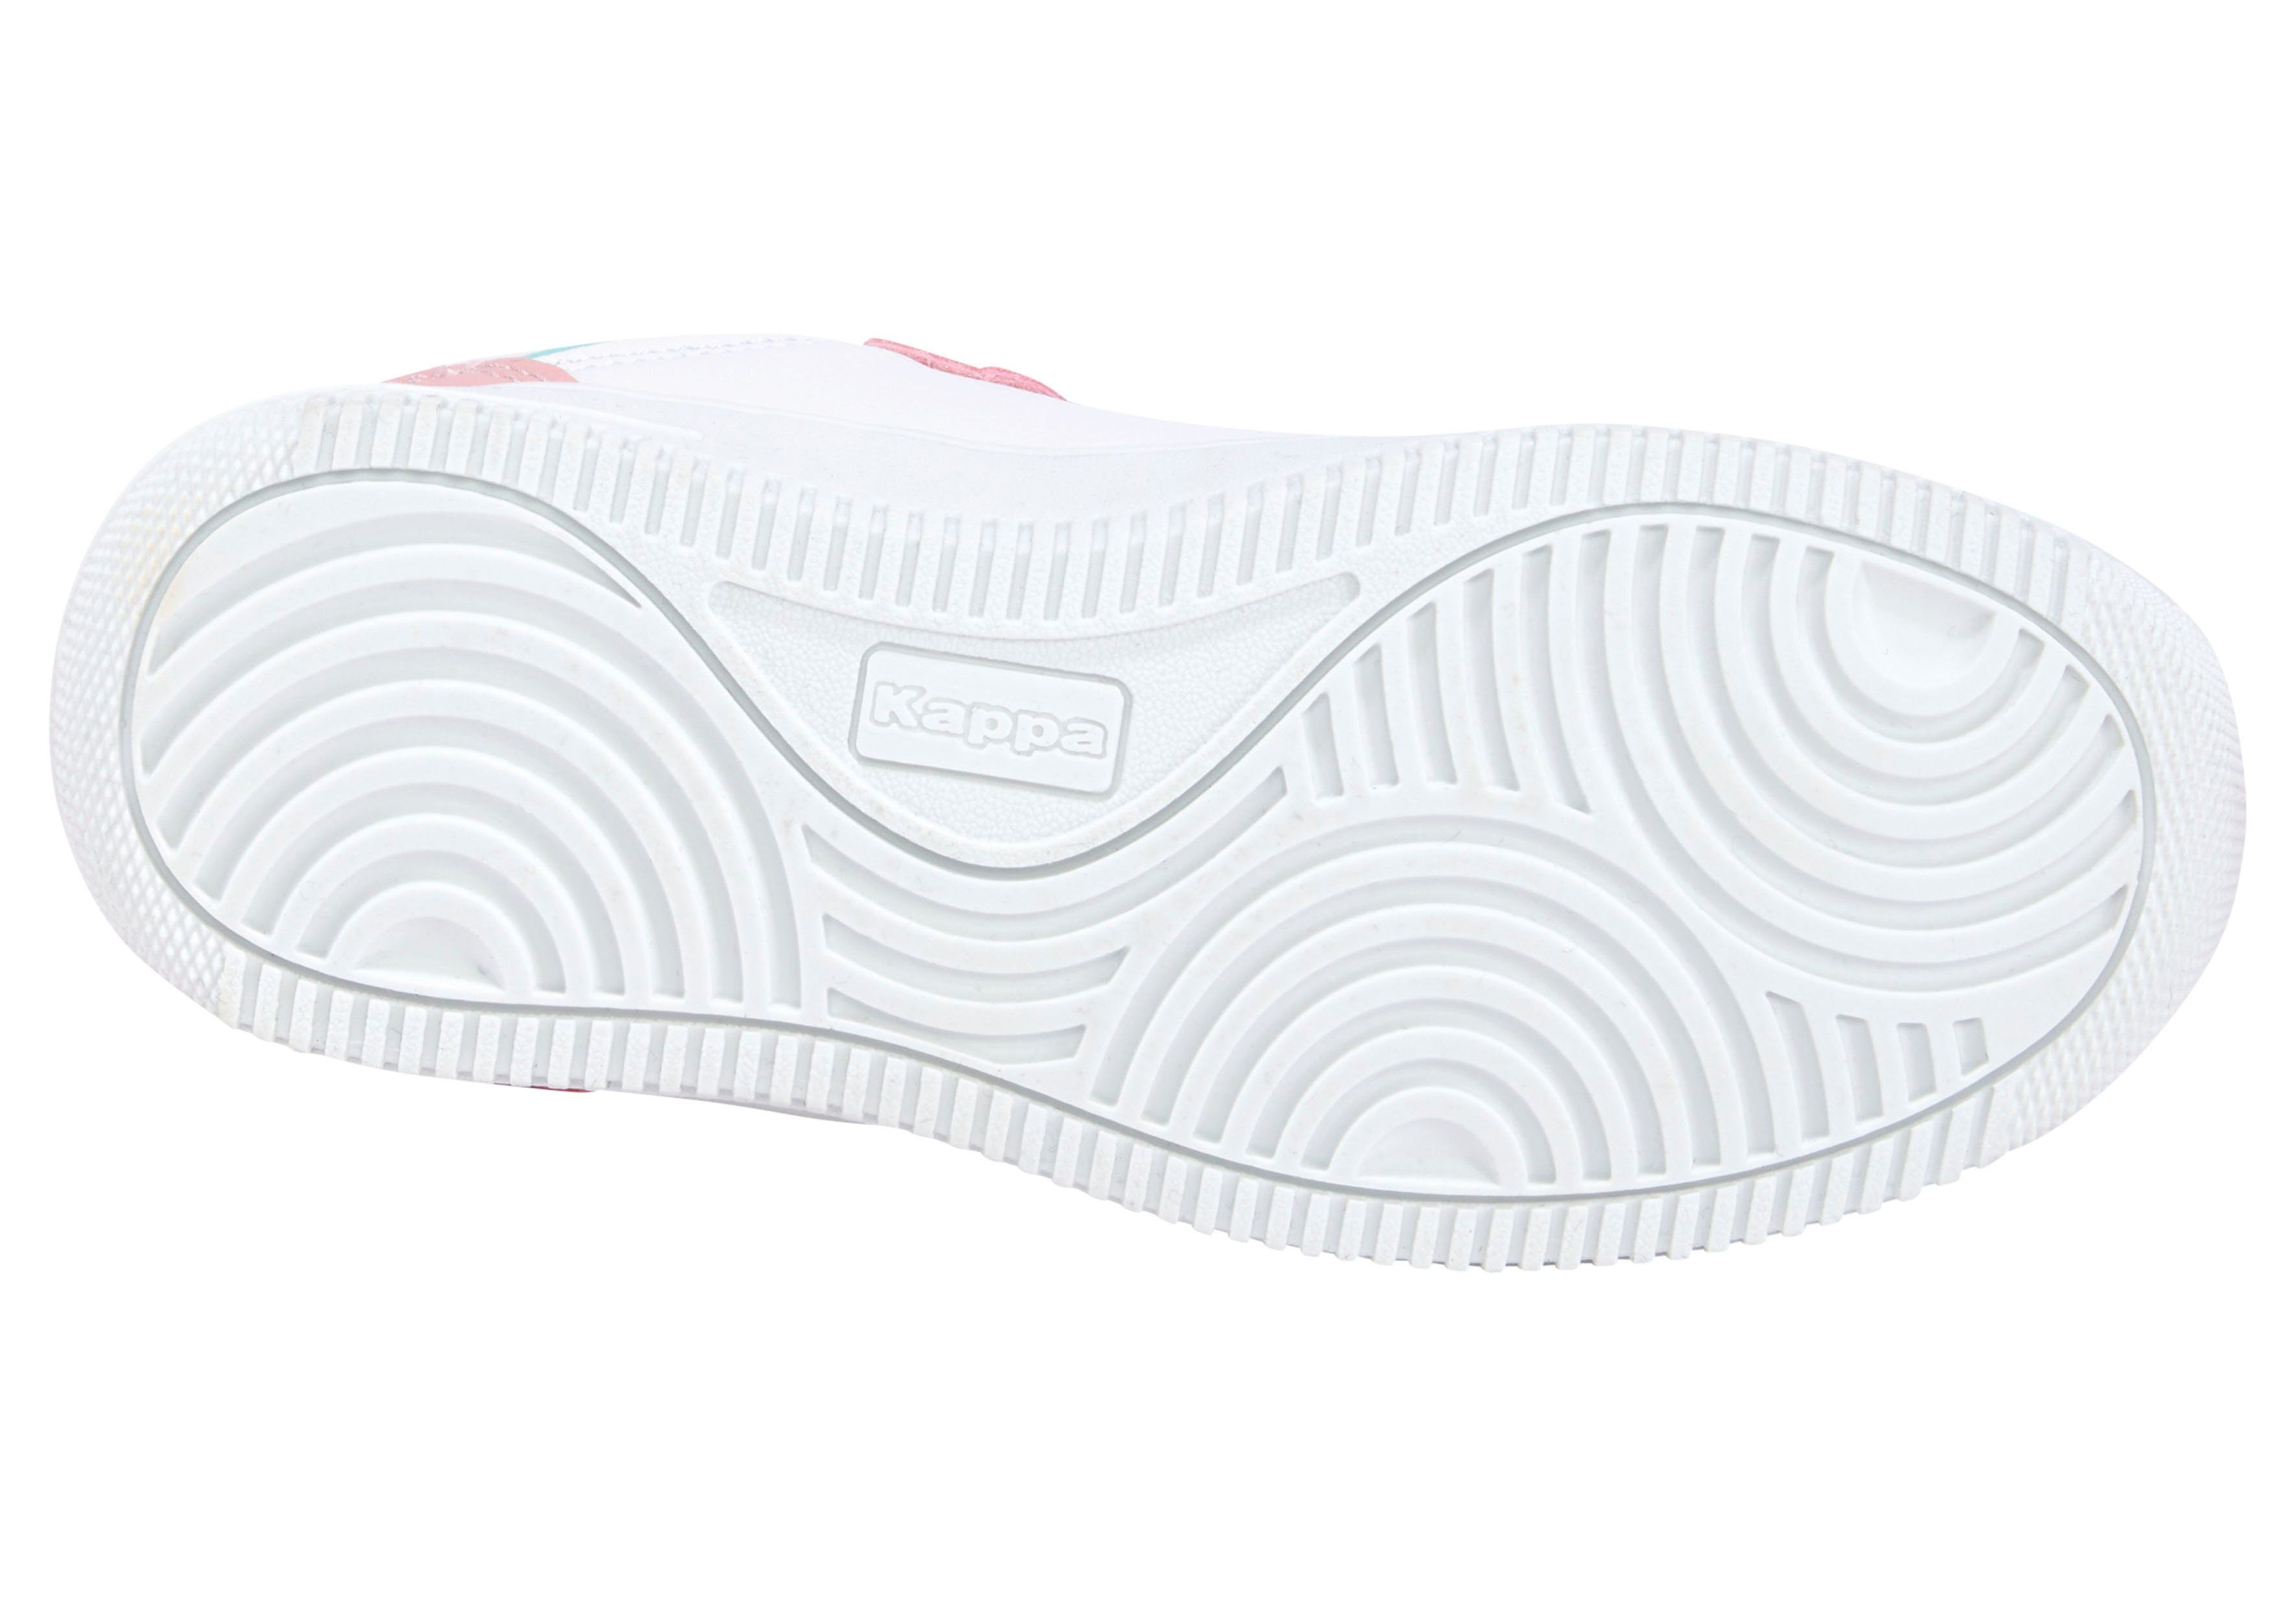 Kappa rosa-weiß Sneaker